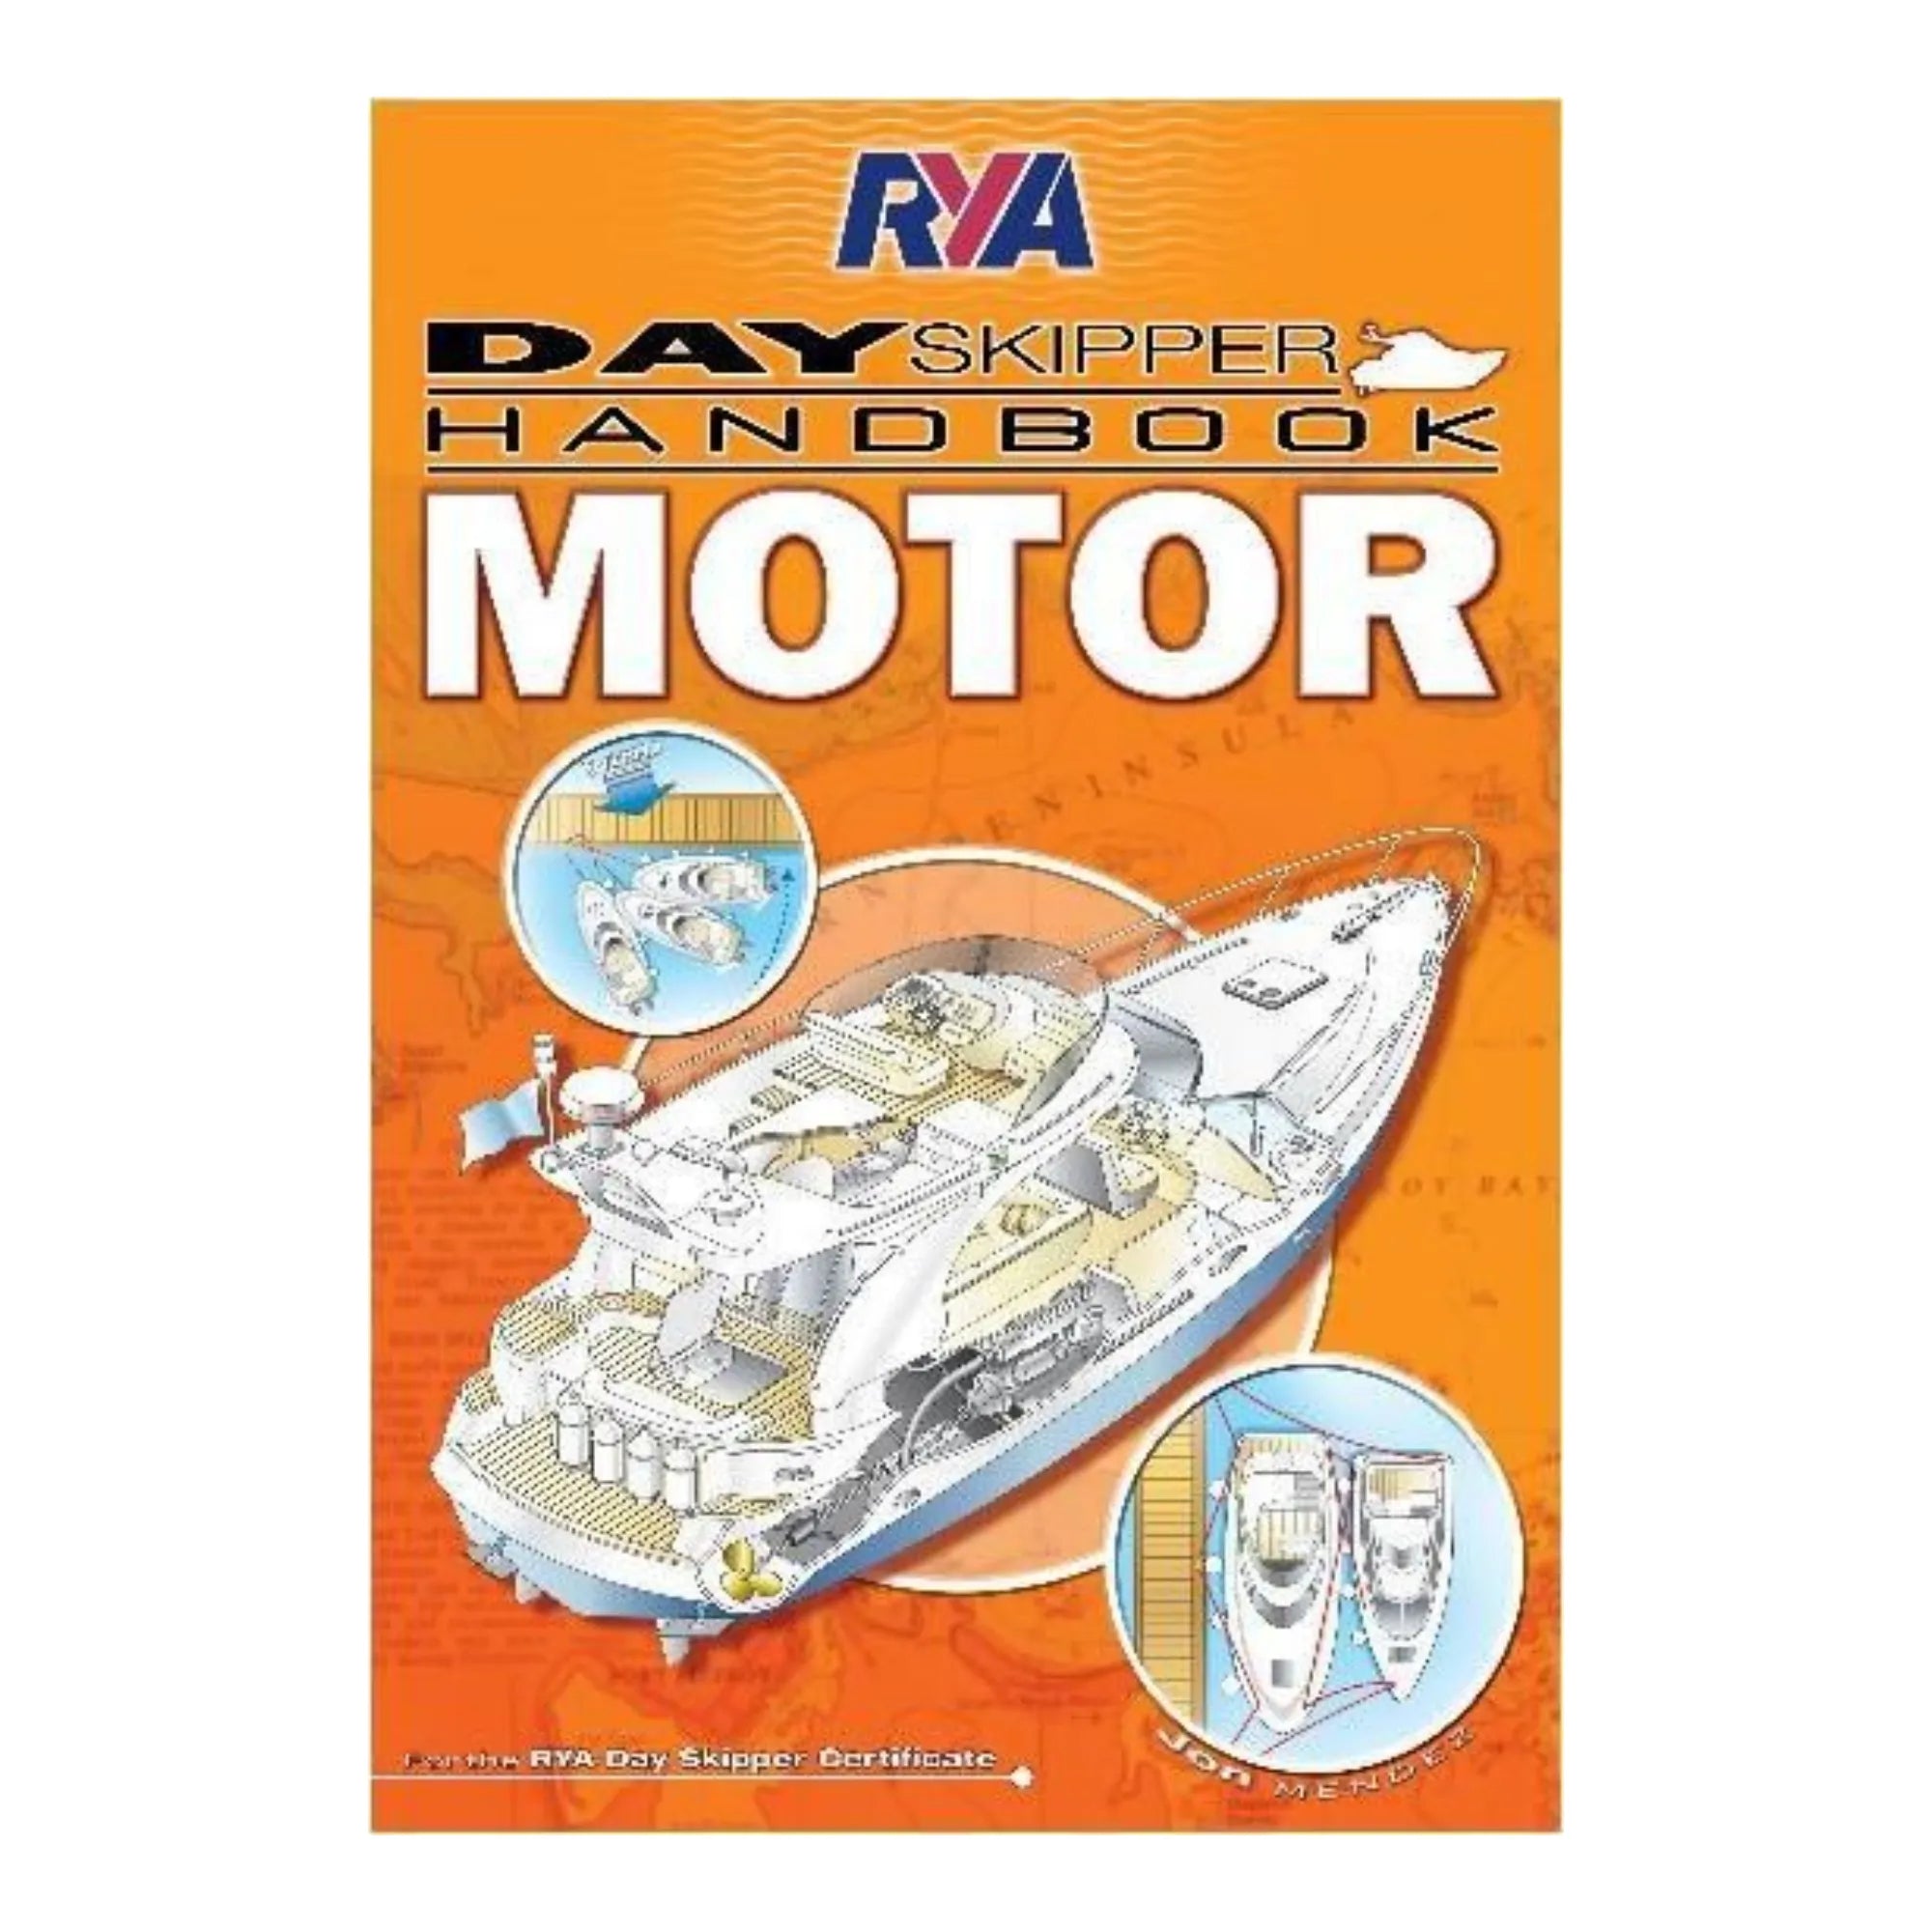 G97 Day Skipper Handbook - Motor